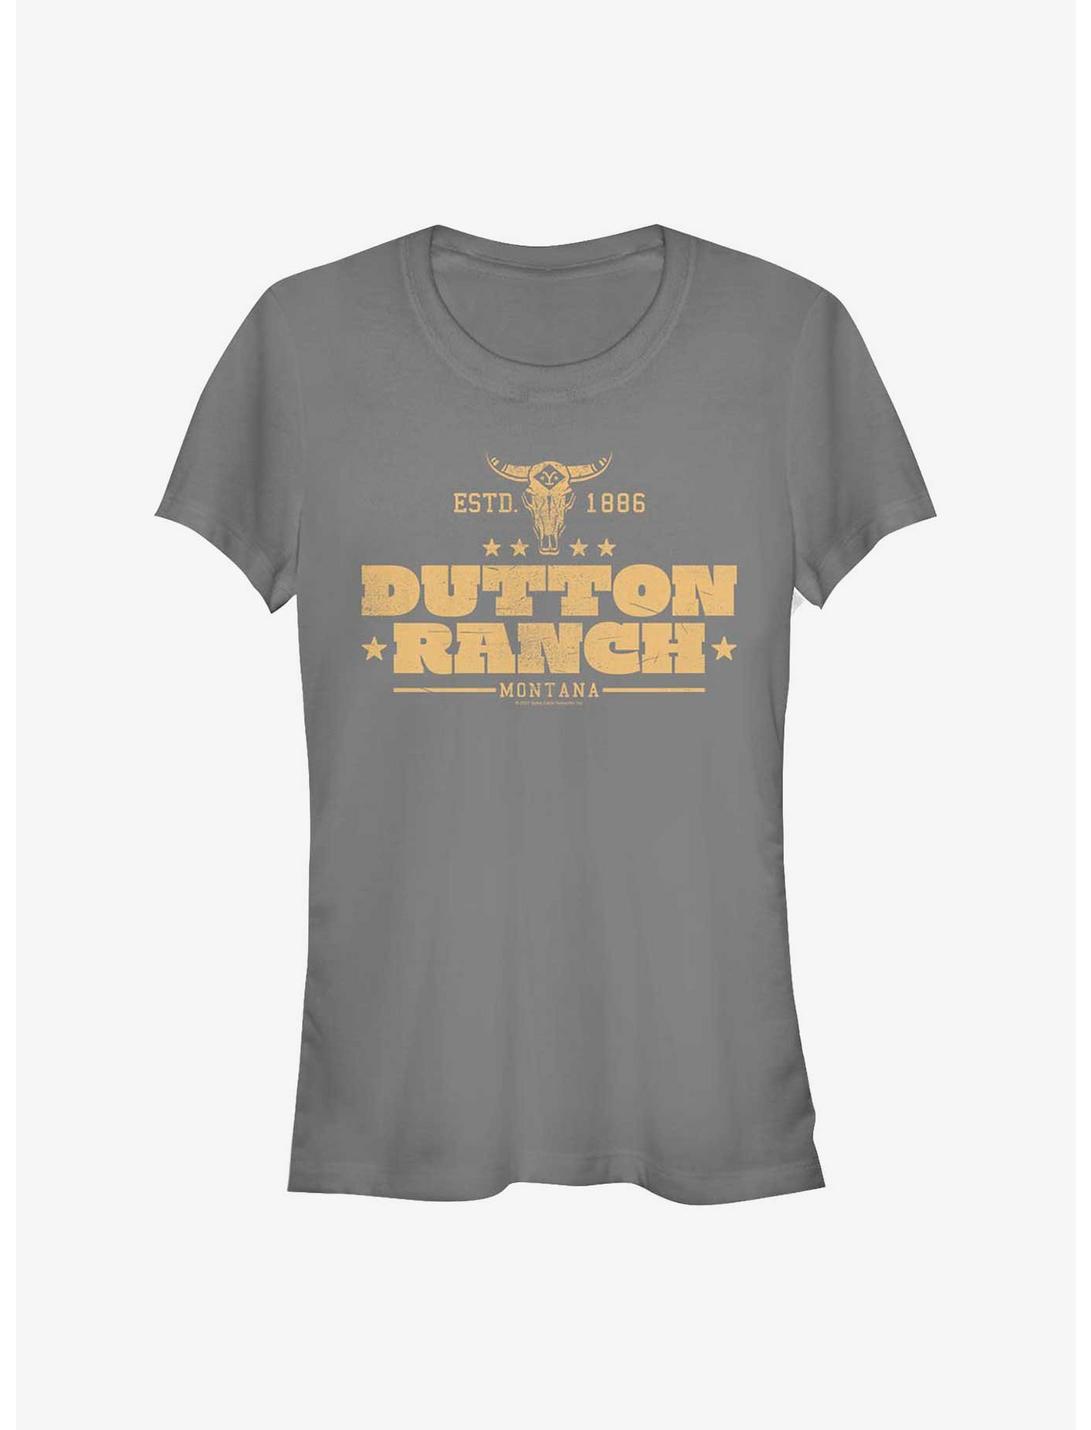 Yellowstone Dutton Ranch Est. 1886 Girls T-Shirt, CHARCOAL, hi-res